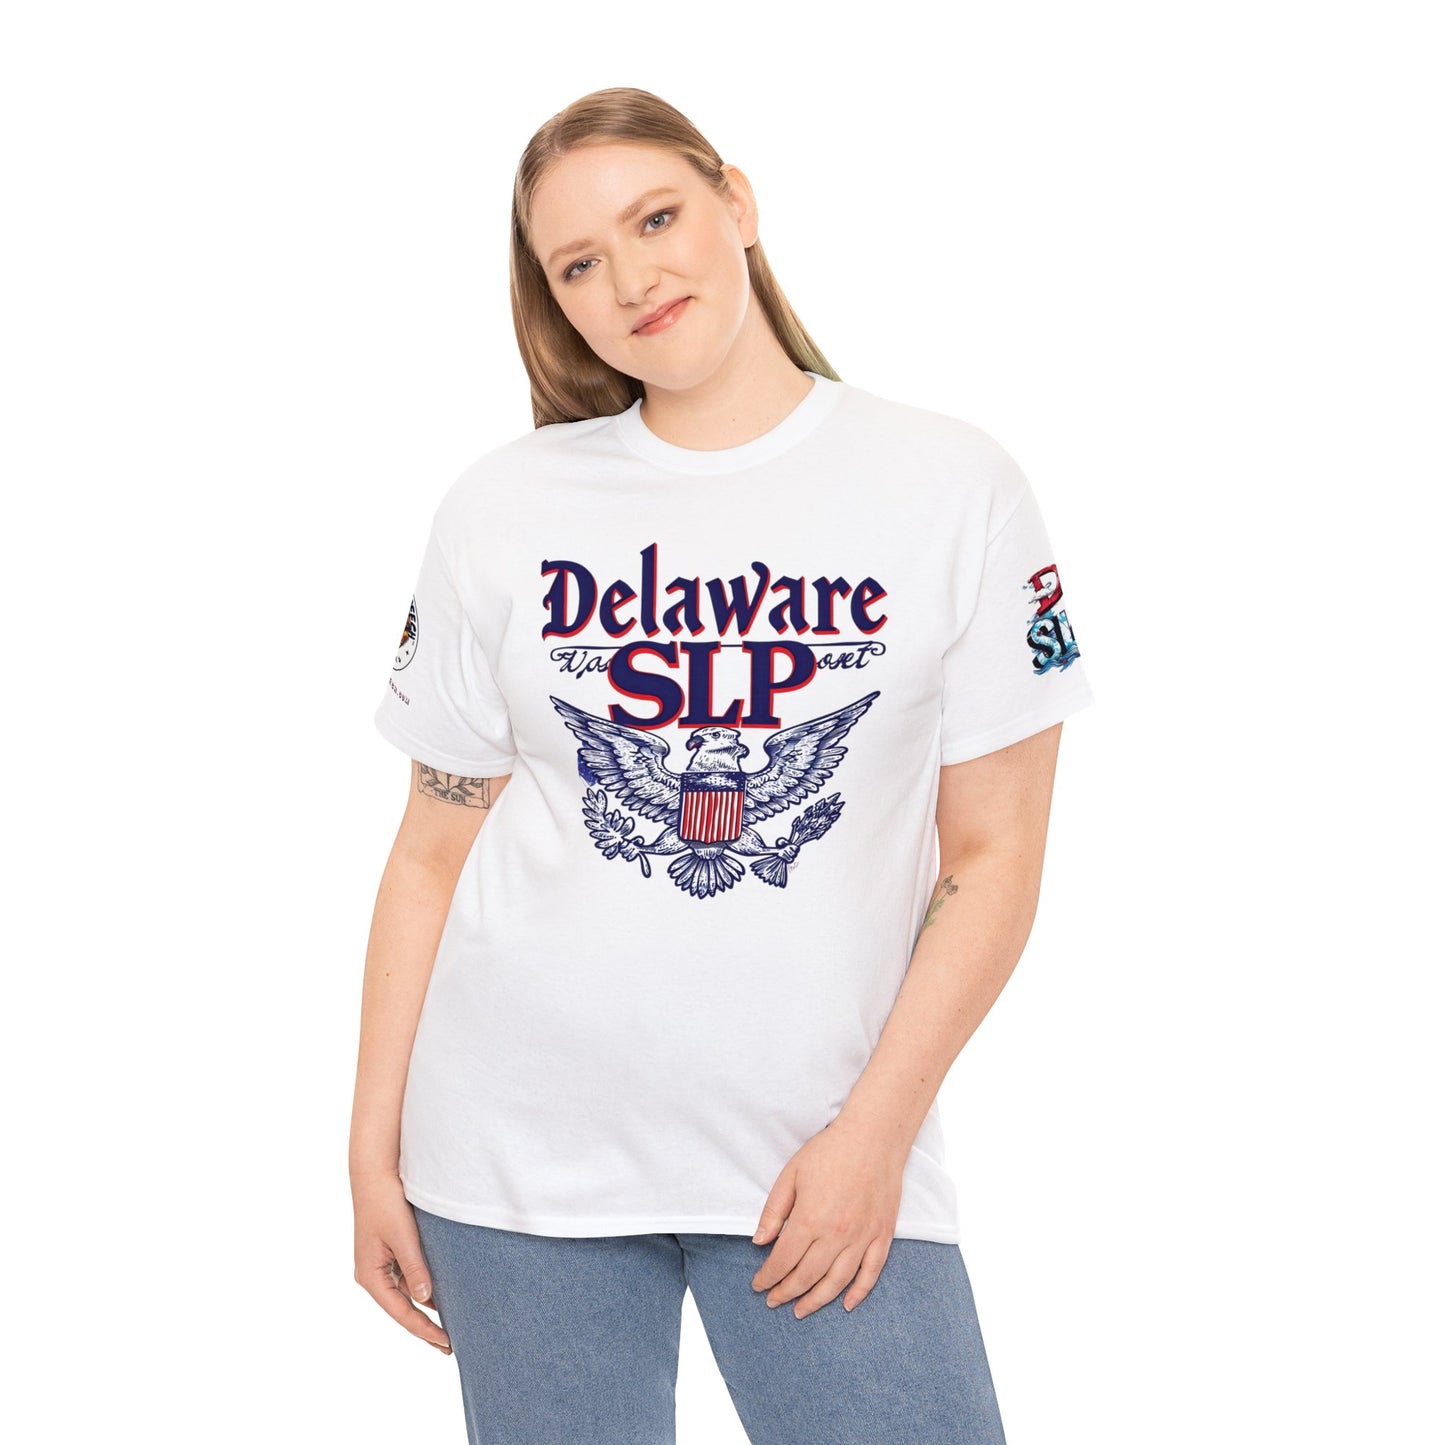 Delaware SLP #2 Speech Therapy Shirt